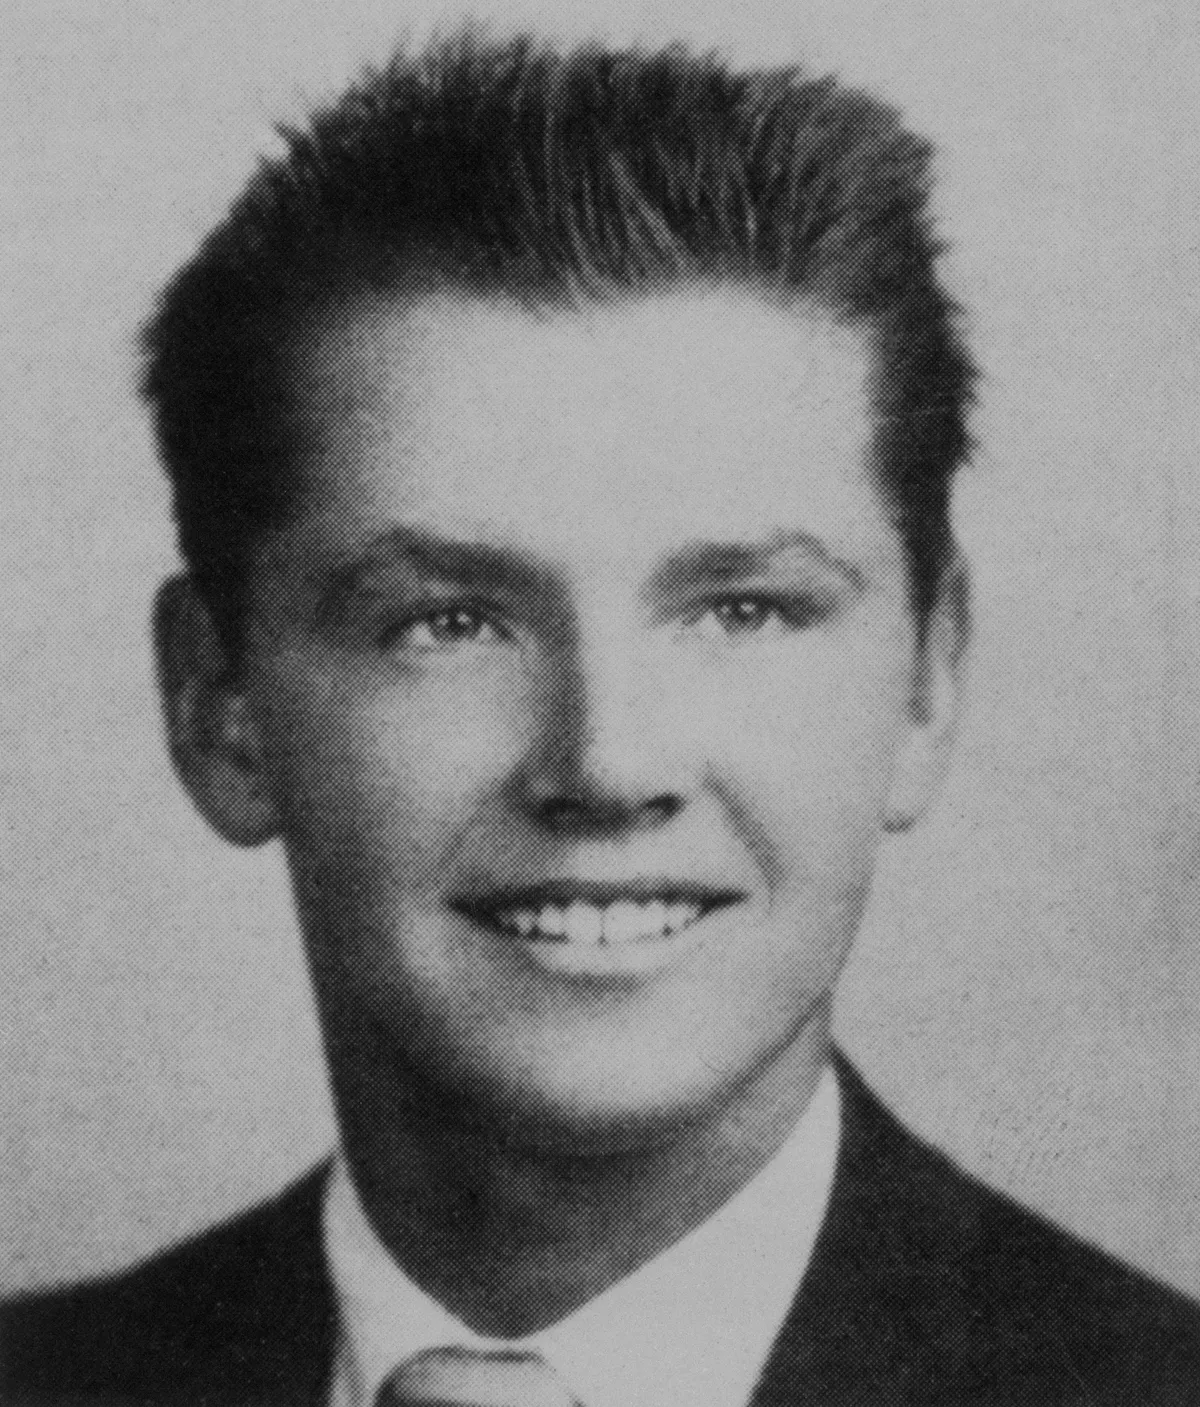 High school yearbook photo of Jack Nicholson